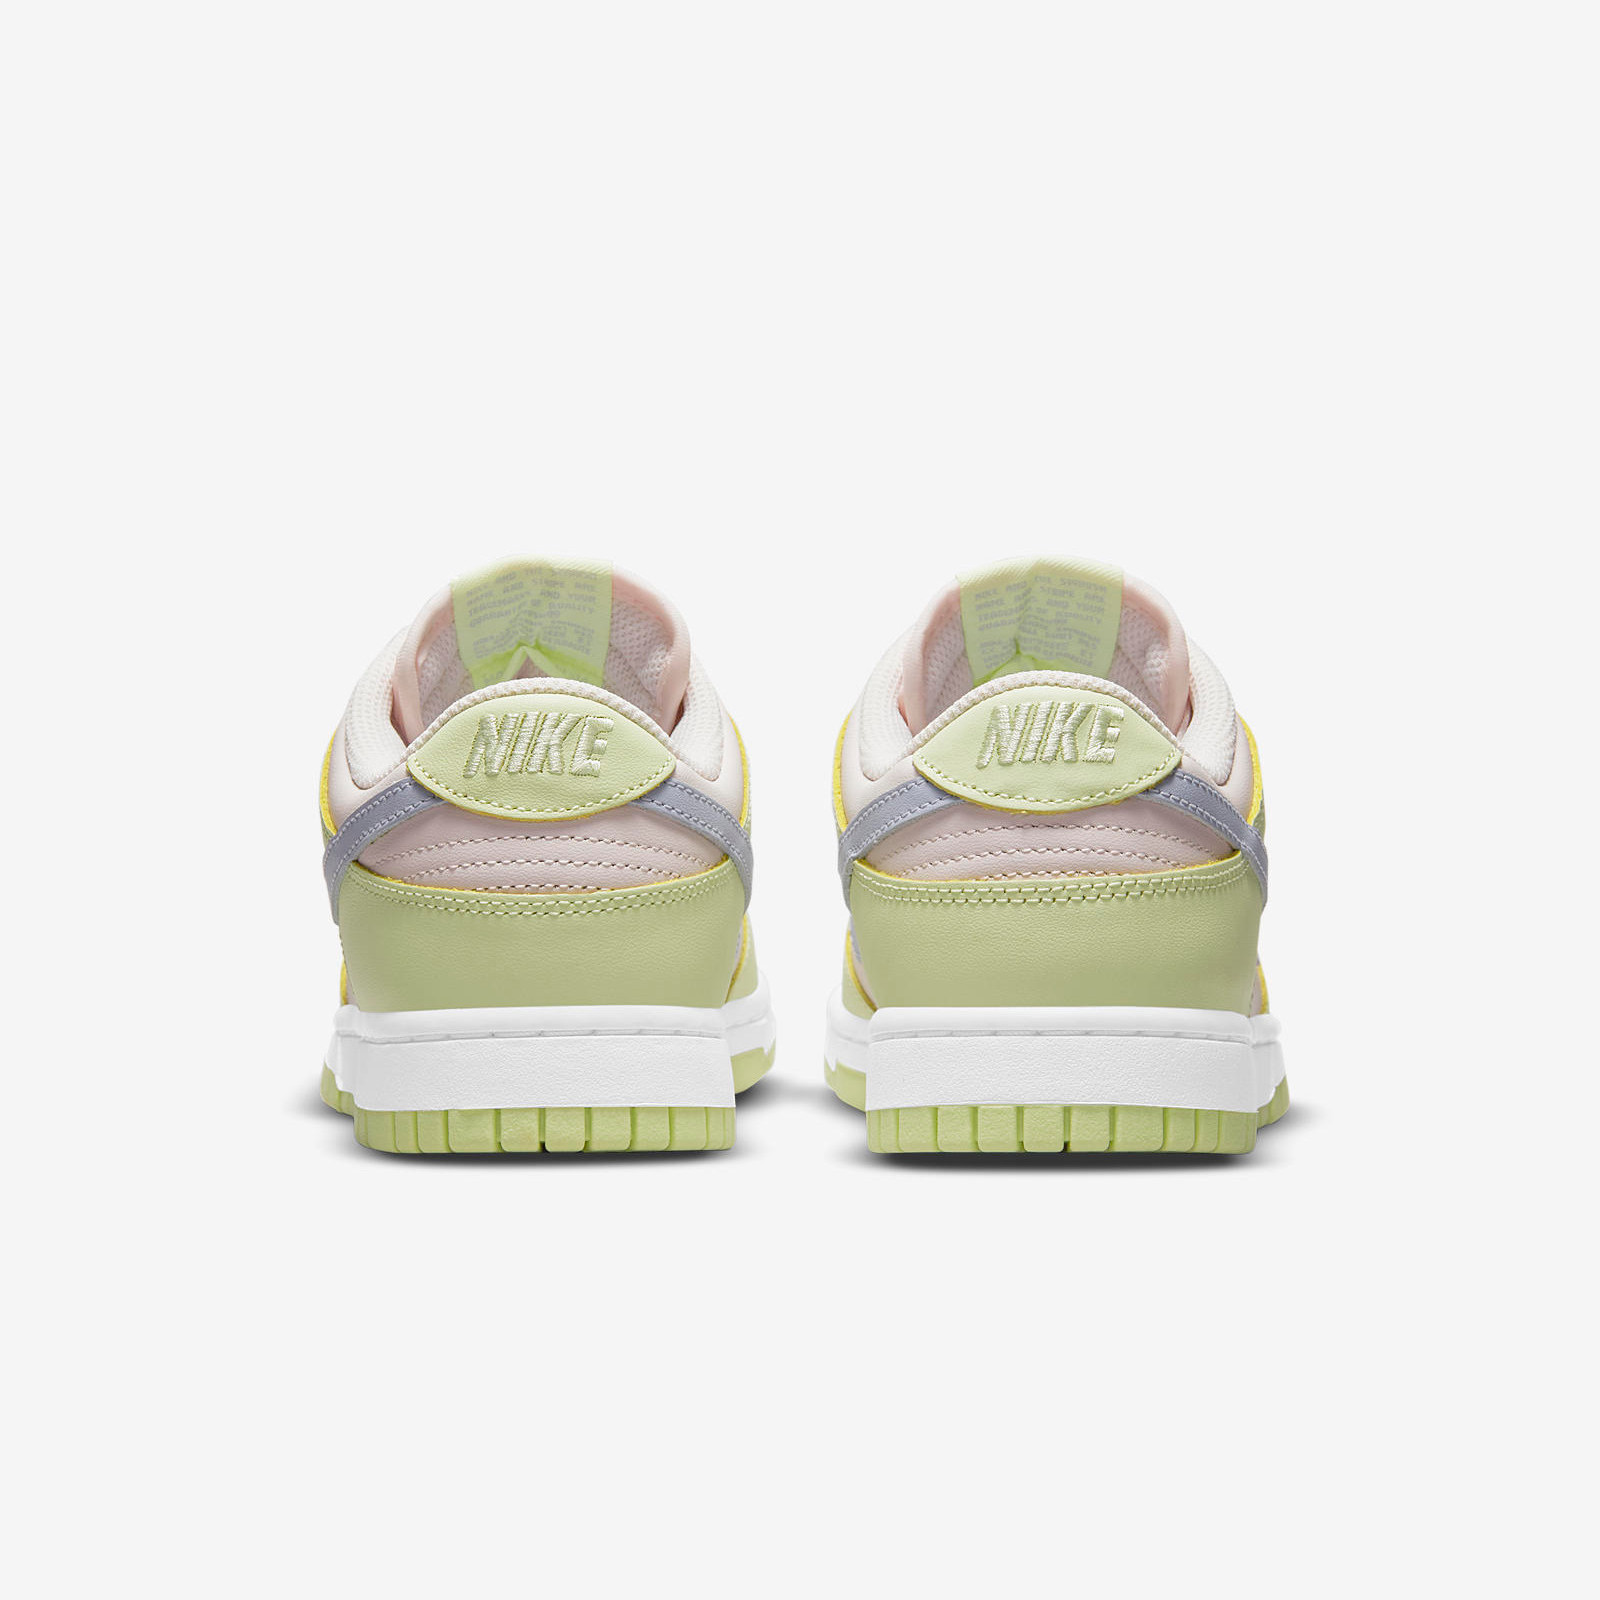 Nike Dunk Low
« Light Soft Pink »